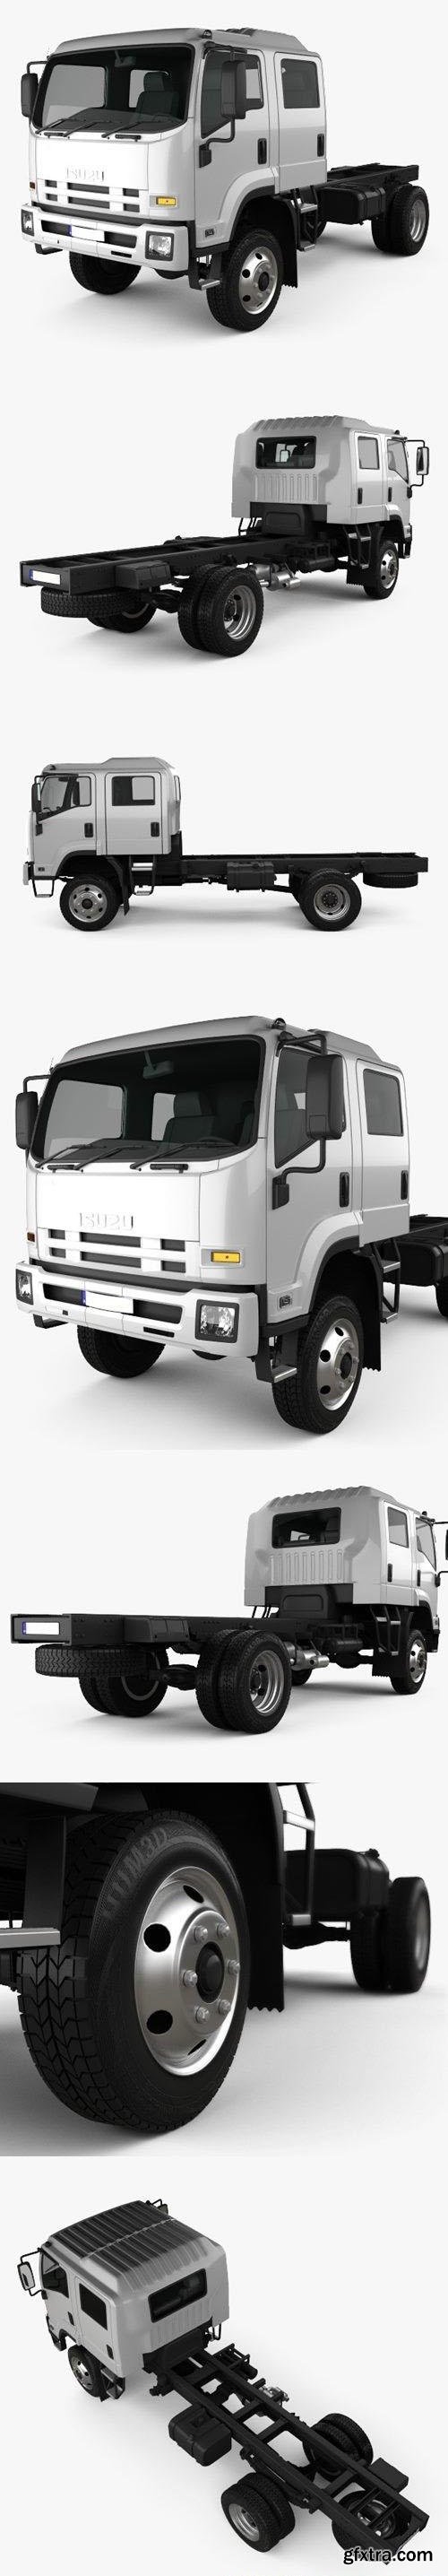 Isuzu FTS 800 Crew Cab Chassis Truck 2014 3D Model